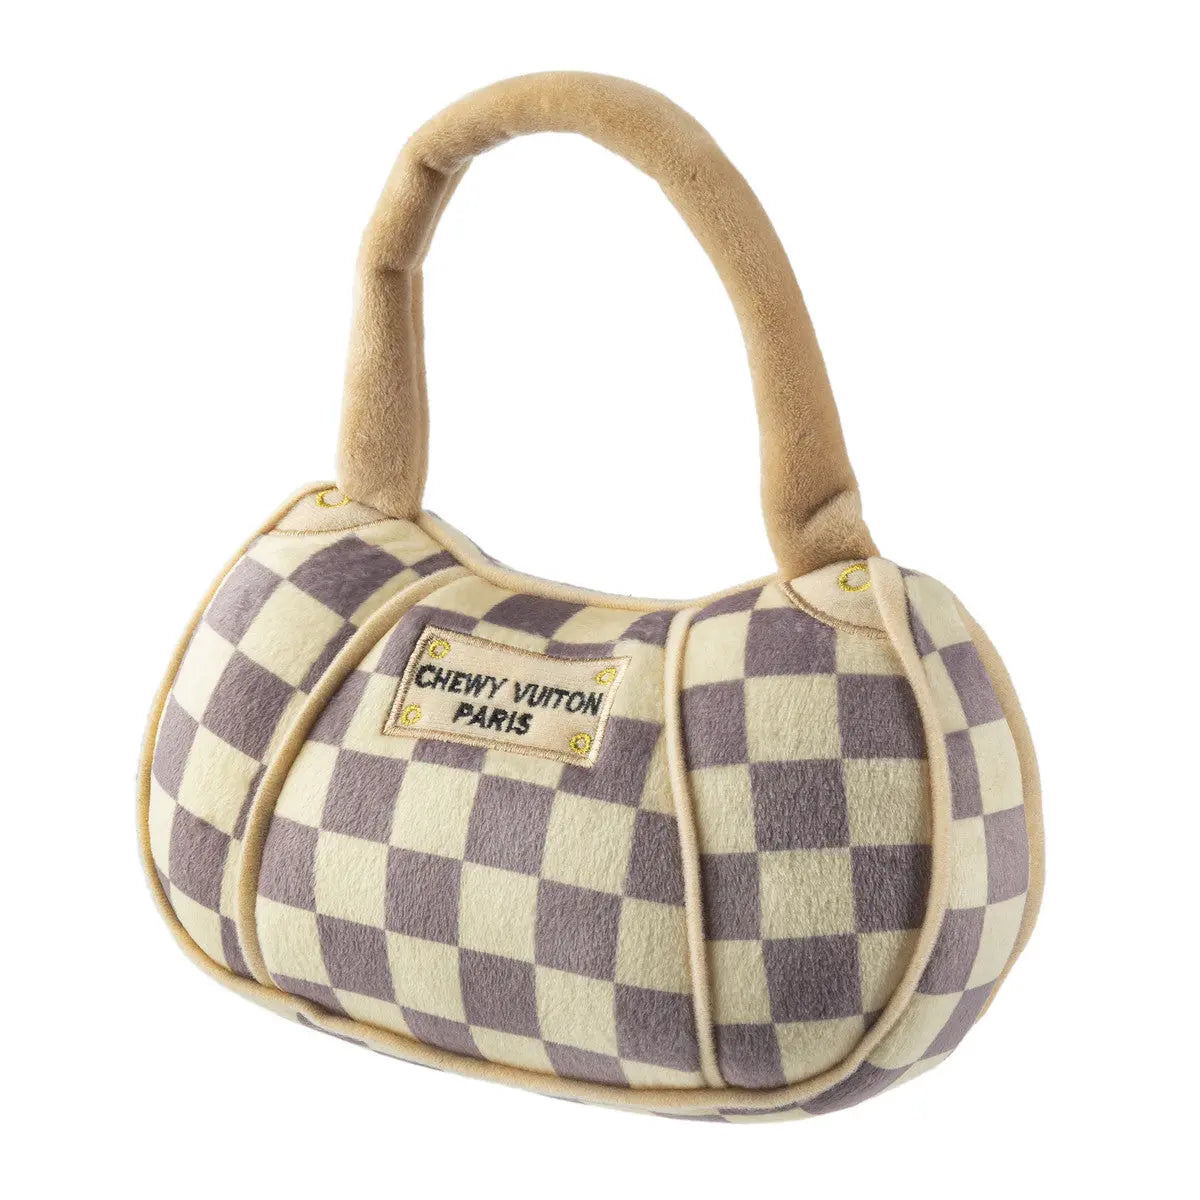 Haute Diggity Dog Checker Chewy Vuiton Handbag Plush Dog Toy